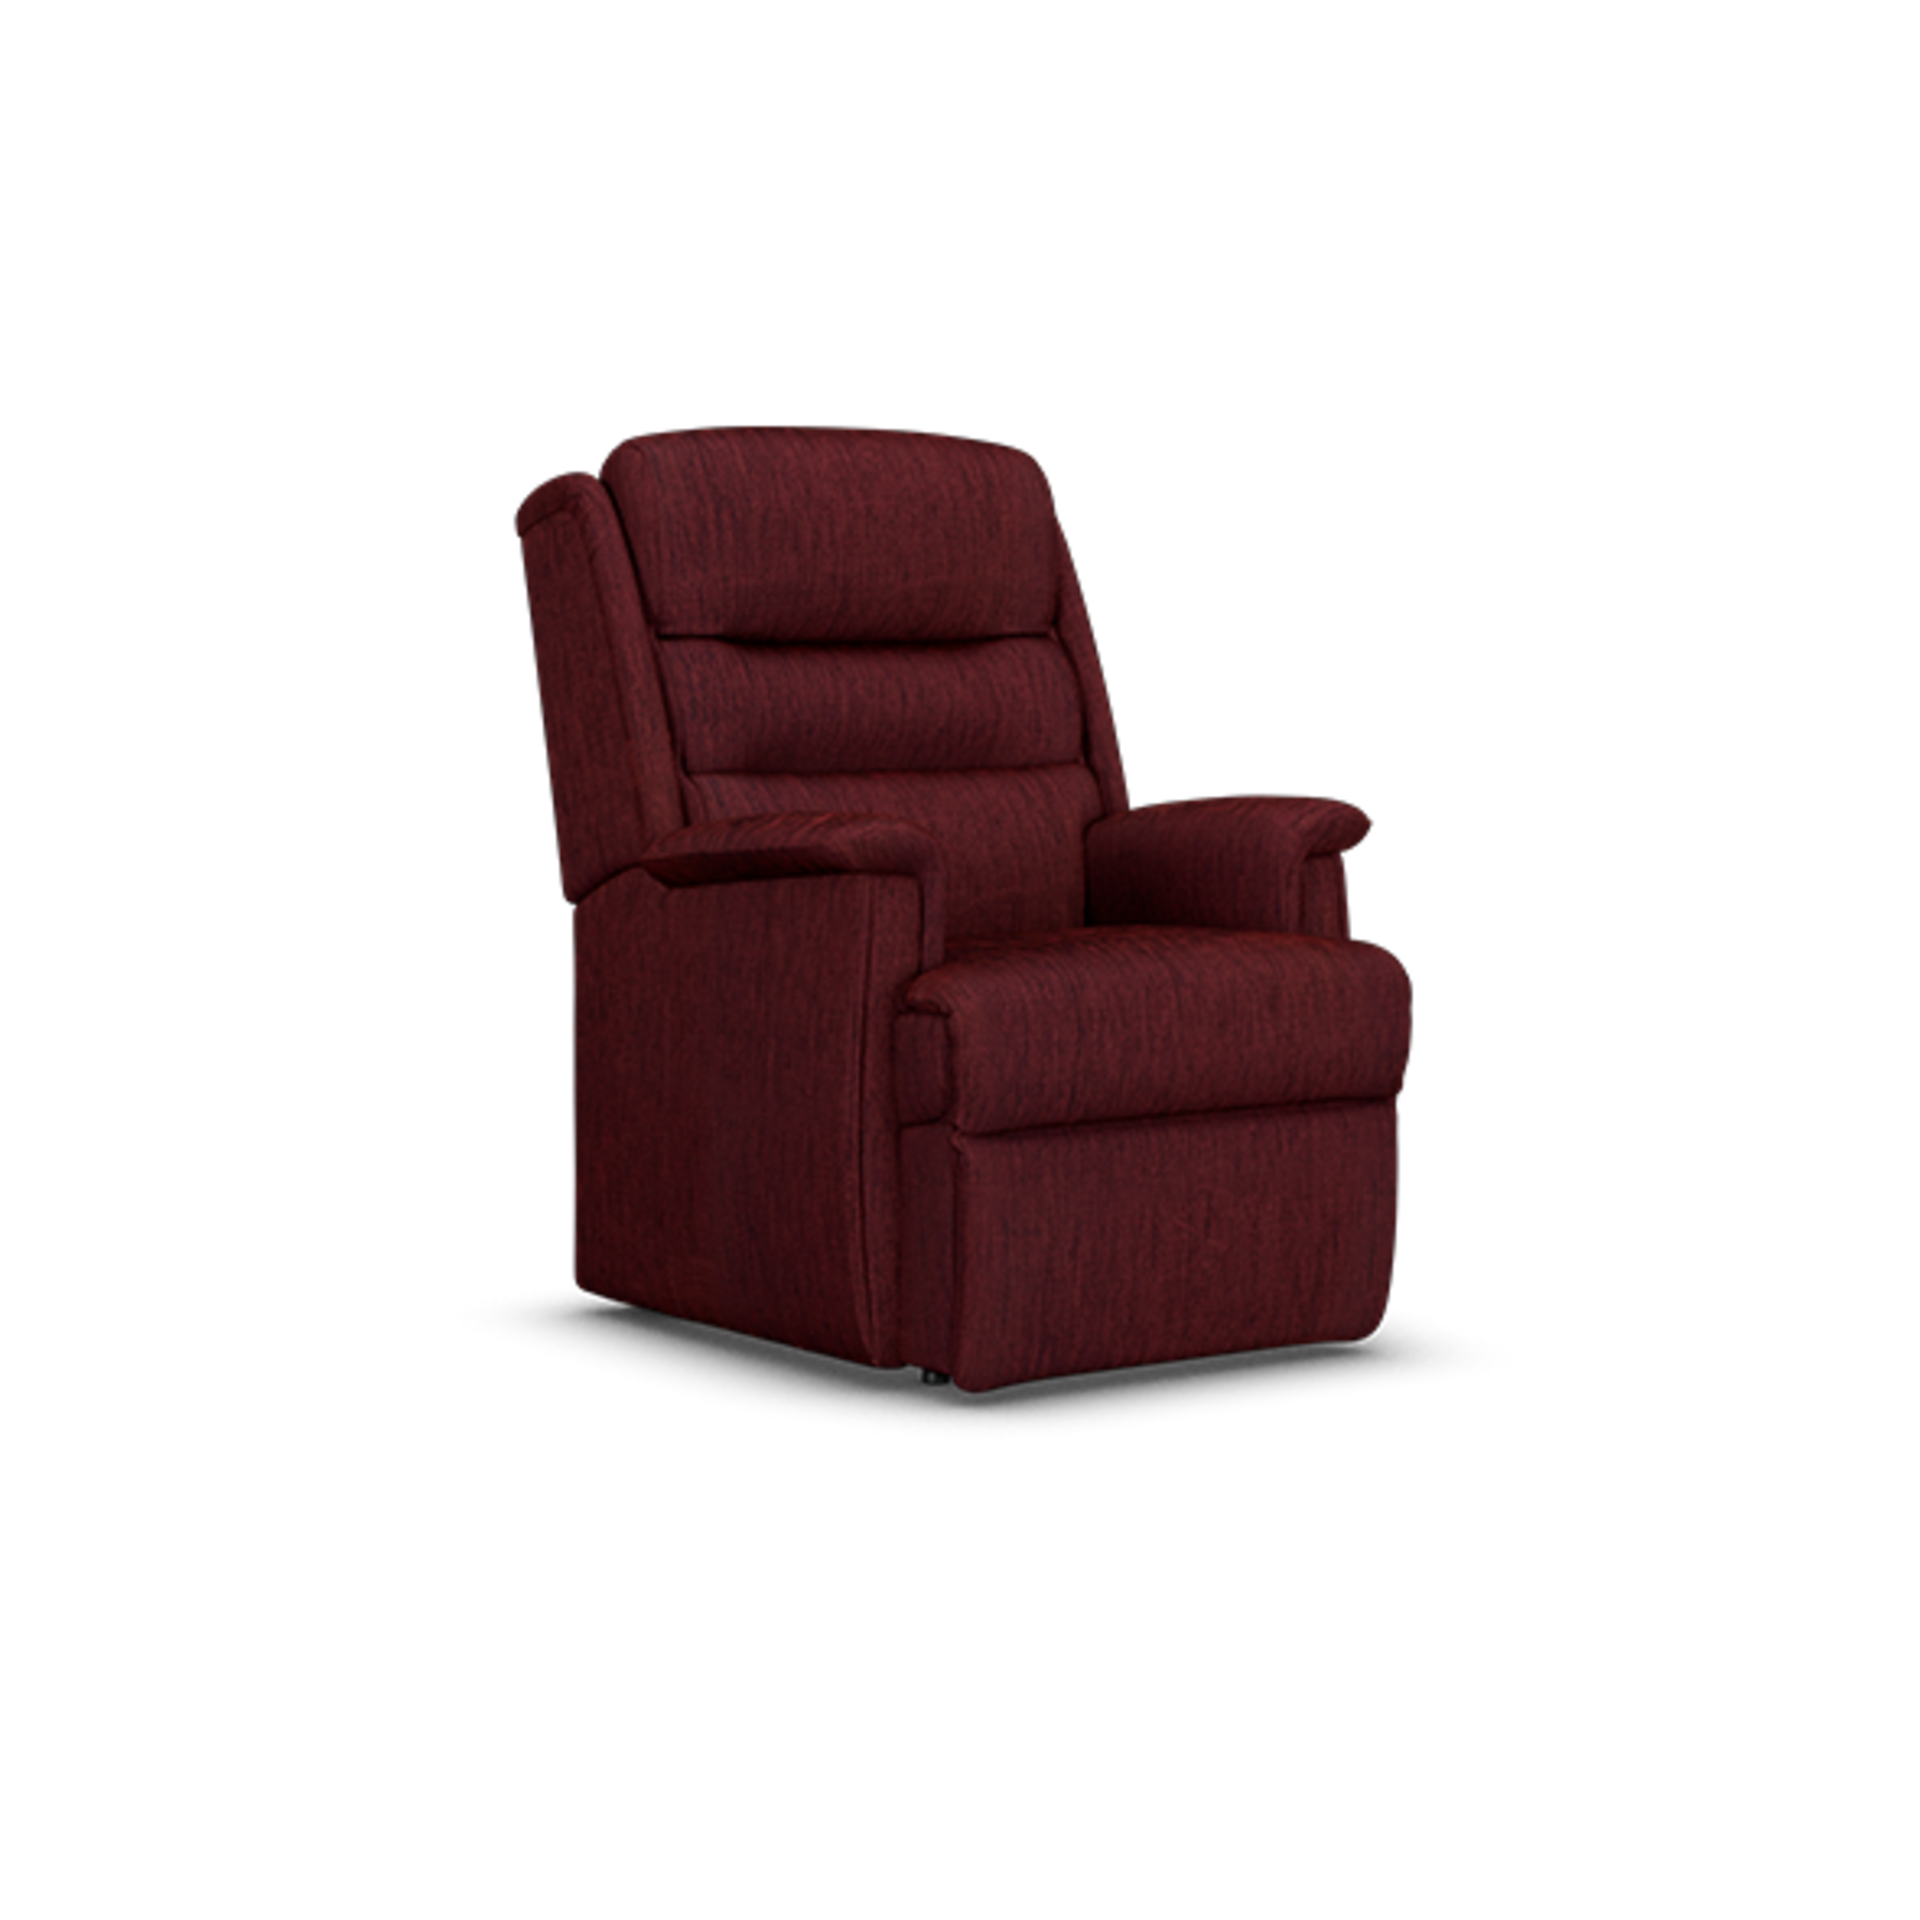 HSL Ripley Boucle Claret Chair High Back Extra Comfort Armchair RRP 1040 SKU HSL-AP-FT0103011456Z3B